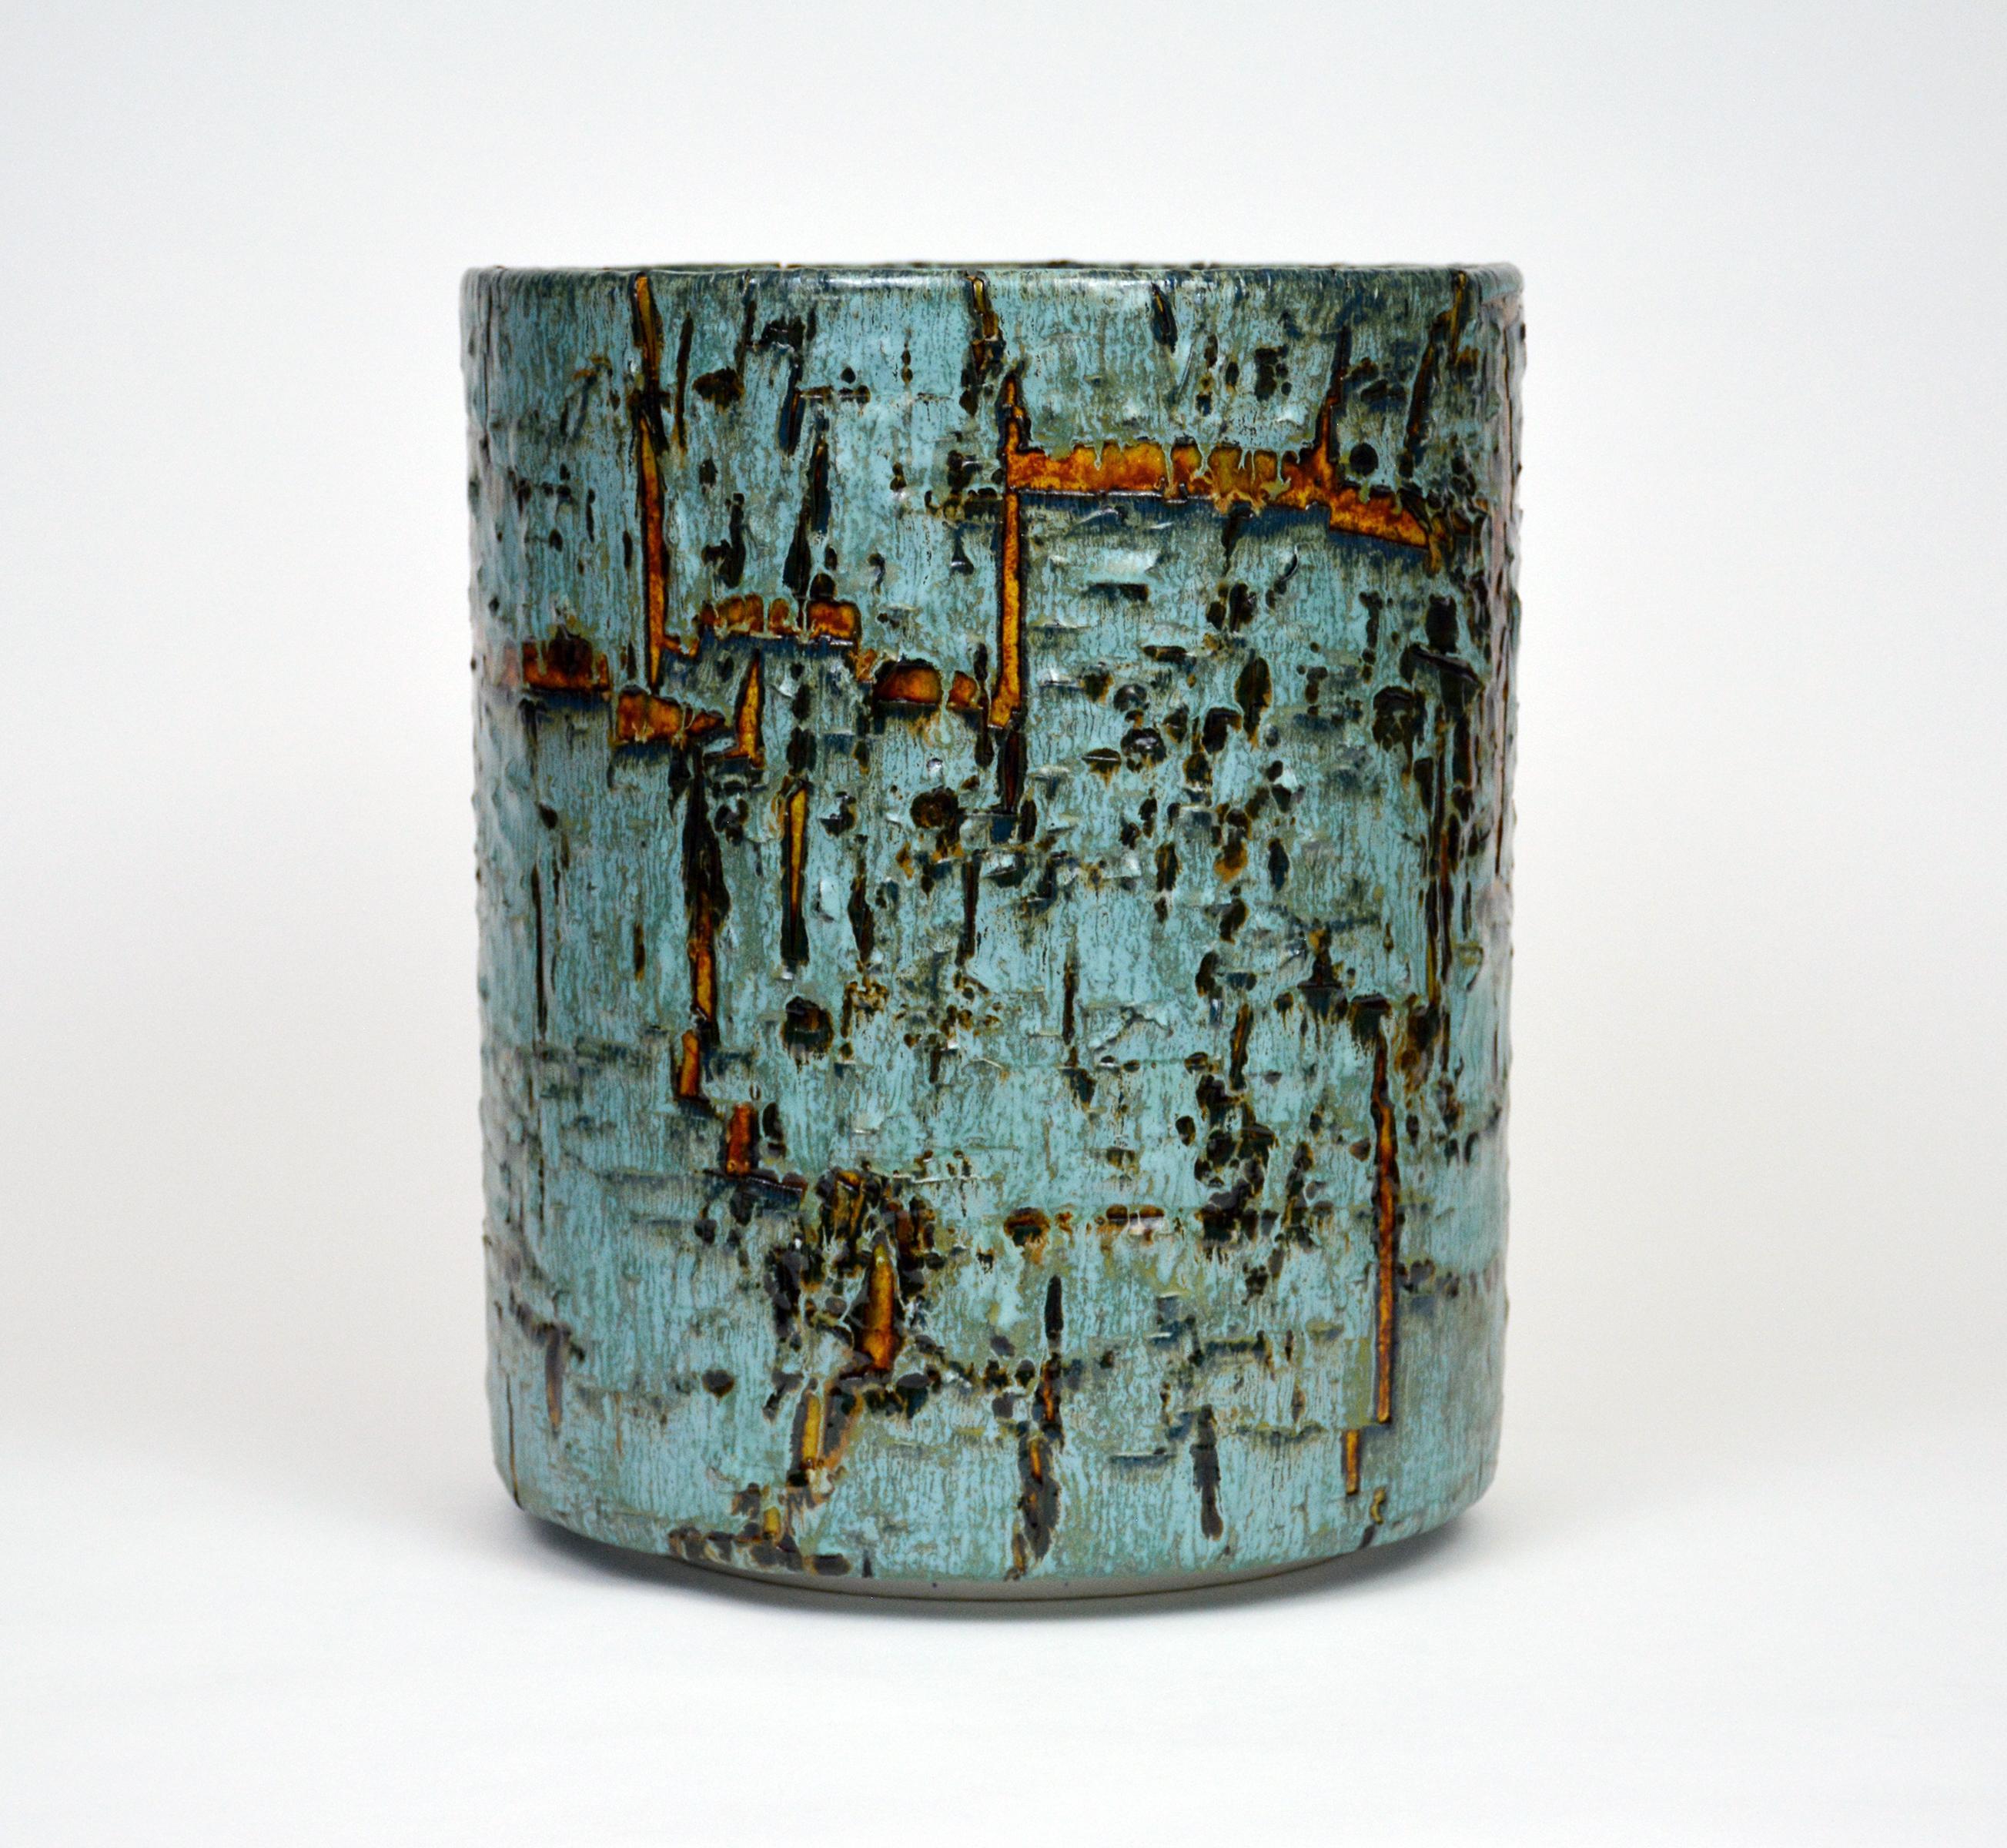 Ceramic Vessel by William Edwards  Cylinder Sculpture  For Sale 2